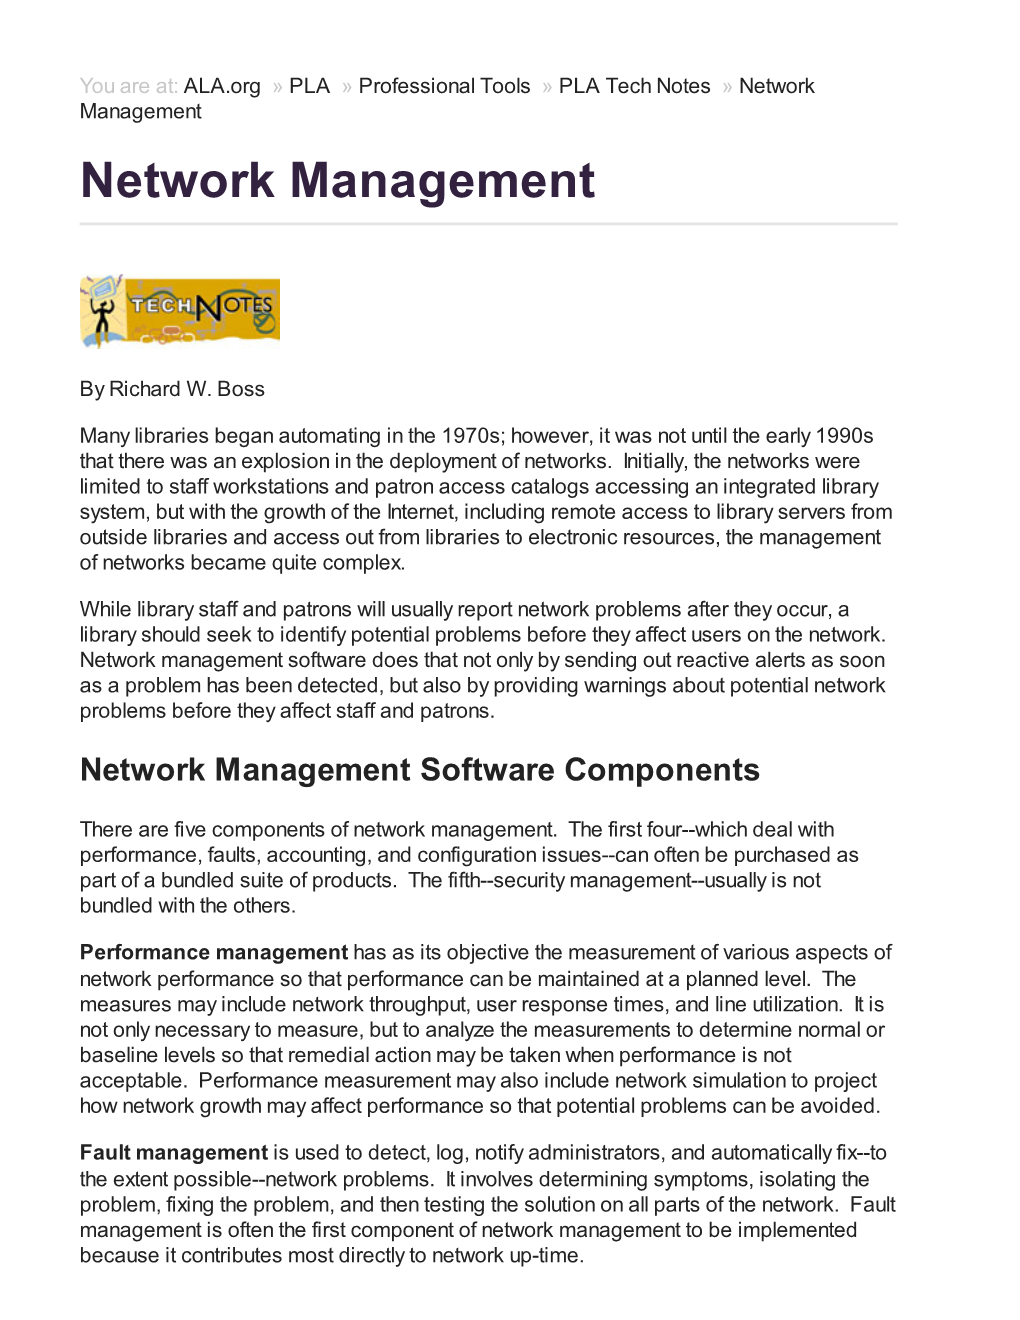 Network Management Network Management